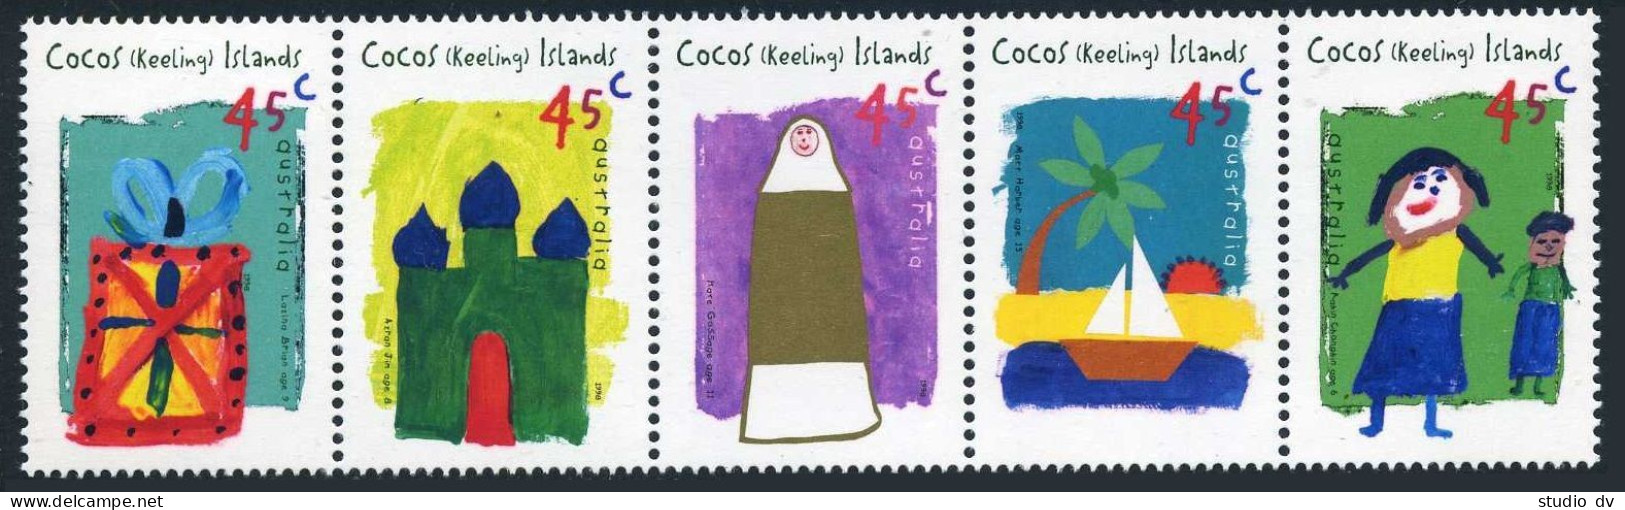 Cocos Islands 326 Ae Strip,MNH.Michel 362-366. Children Drawing,1998. - Cocos (Keeling) Islands